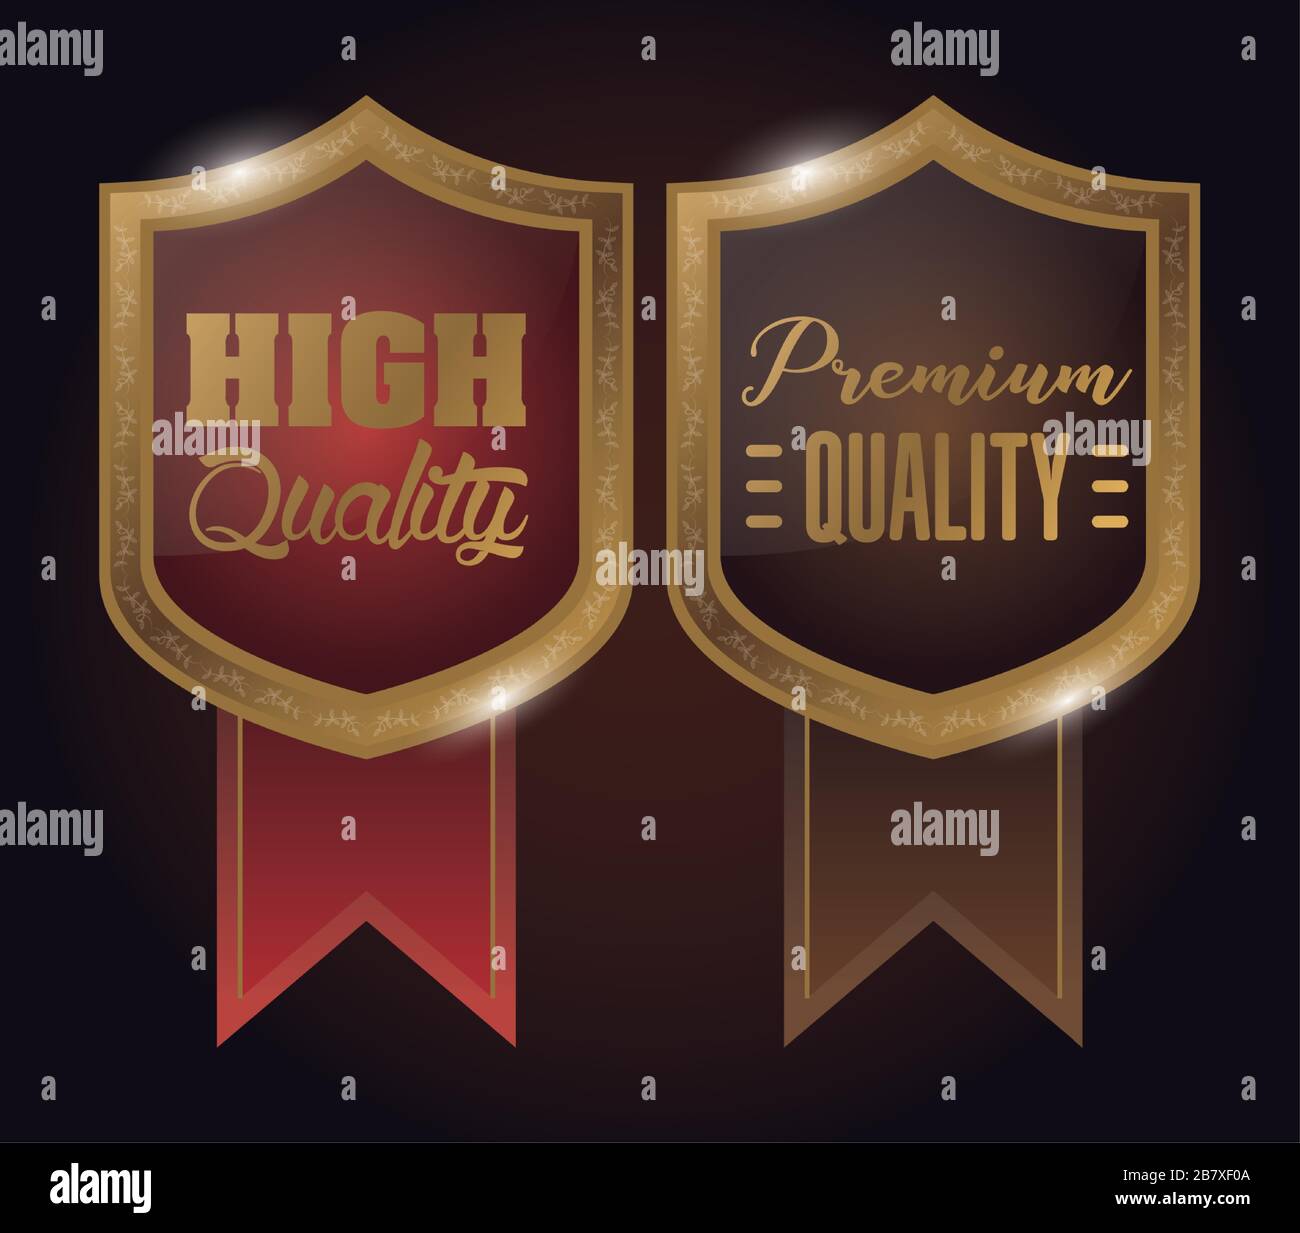 Best seller badge. Premium golden emblem, luxury genuine and highest q By  YummyBuum